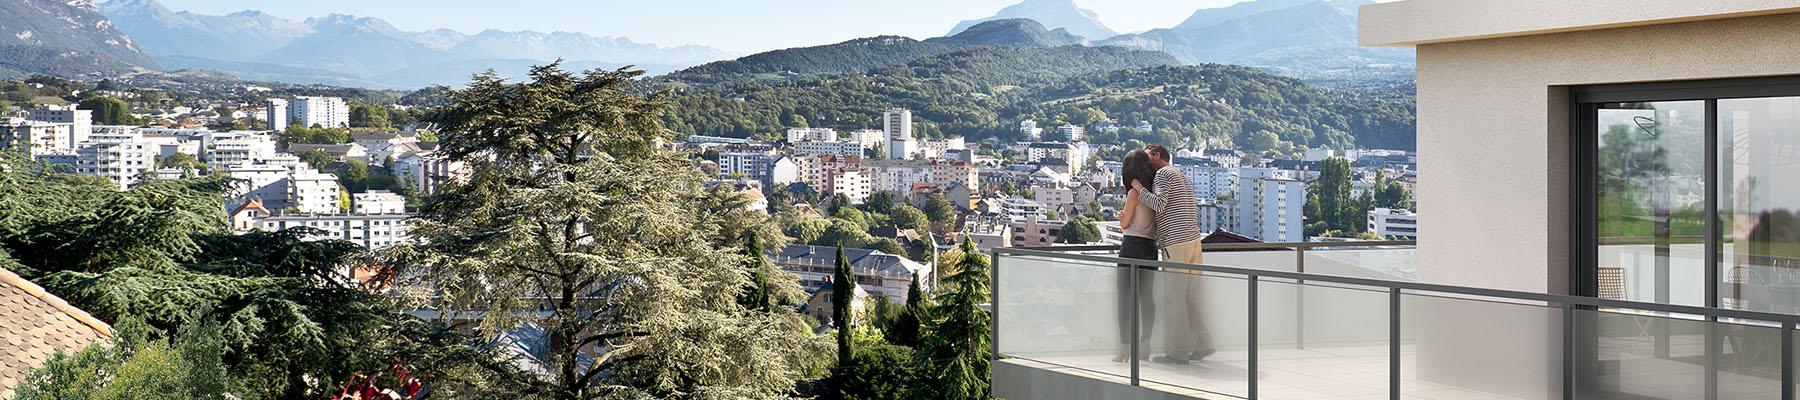 Gi Neuf Spécialiste de l'immobilier neuf à Chambéry et sa région